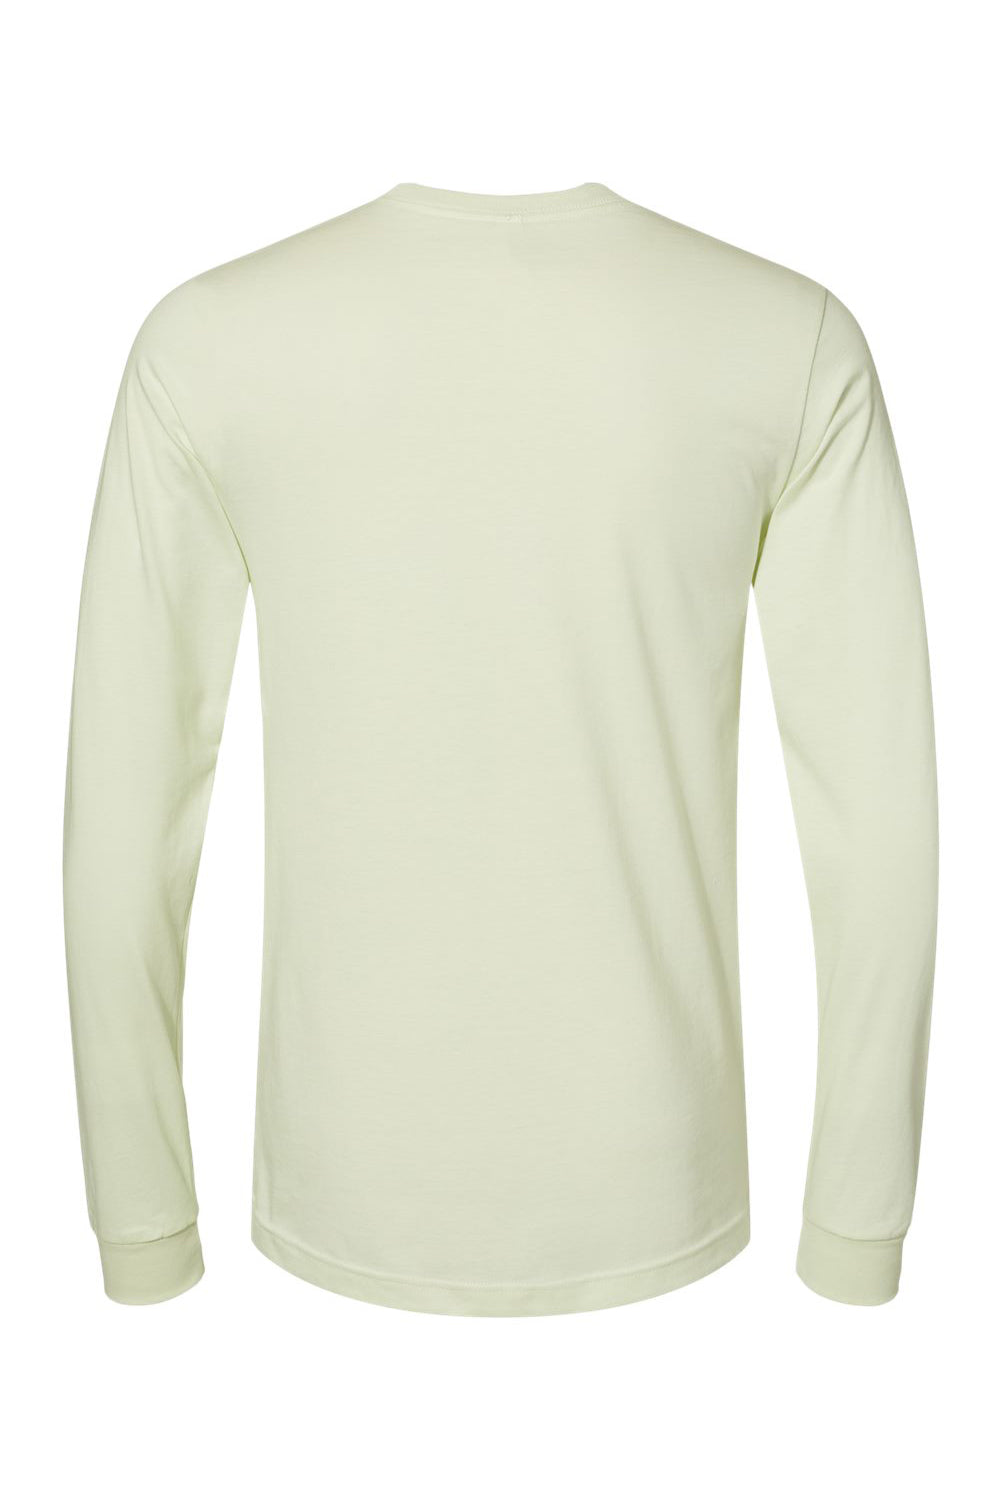 Bella + Canvas BC3501/3501 Mens Jersey Long Sleeve Crewneck T-Shirt Citron Flat Back